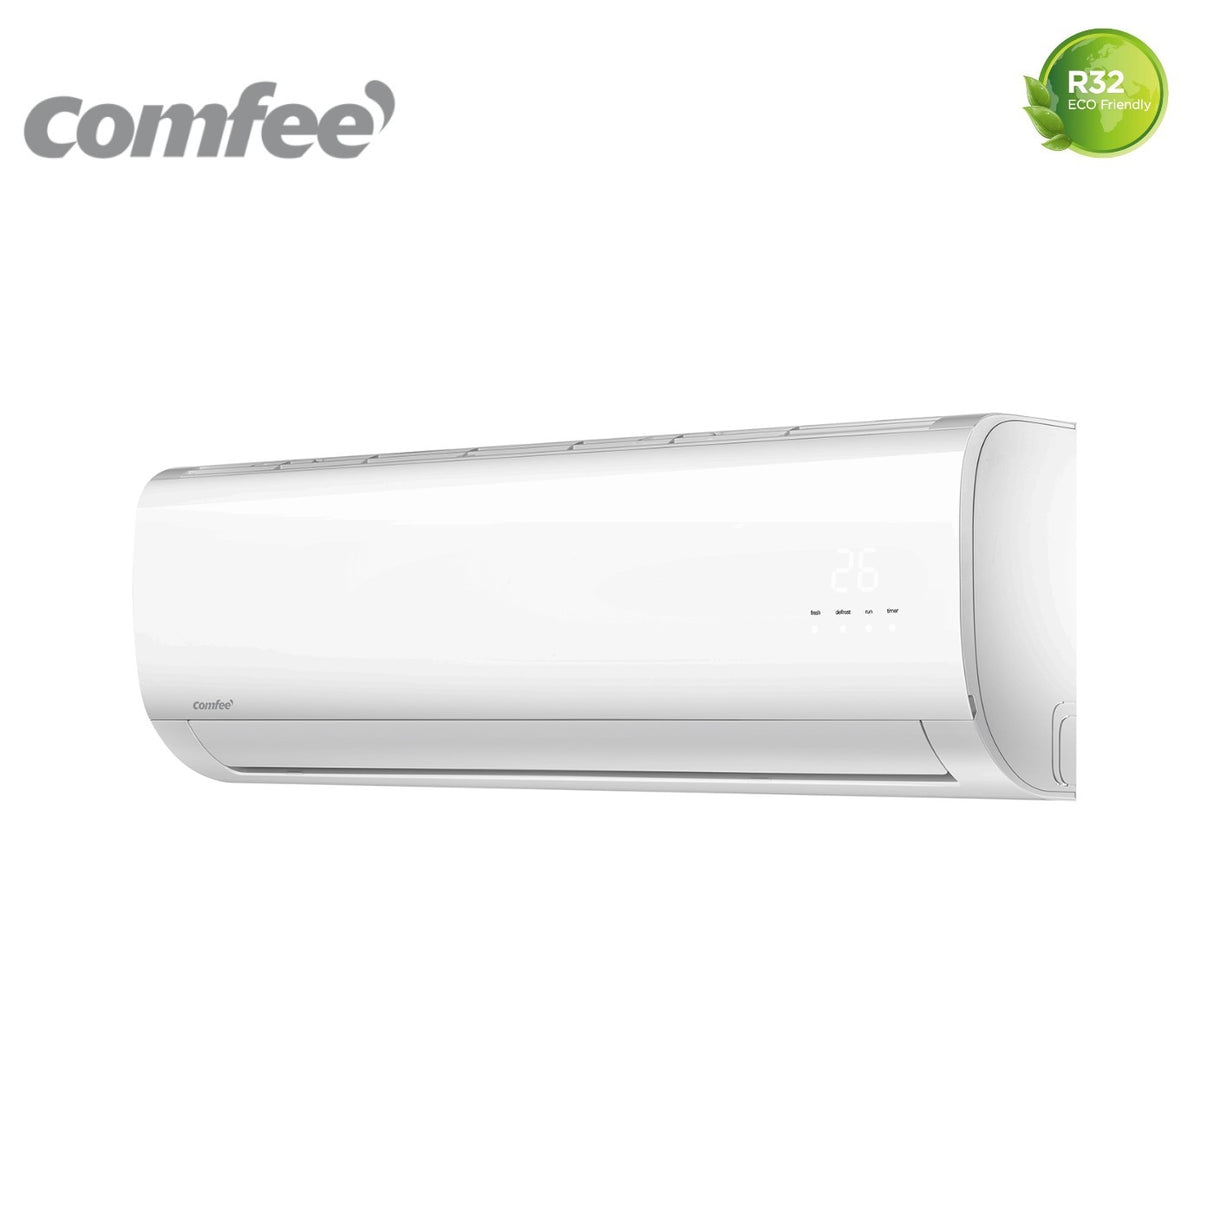 immagine-3-comfee-climatizzatore-condizionatore-comfee-inverter-serie-cf-18000-bu-cf-cfw18a-r-32-wi-fi-optional-classe-aa